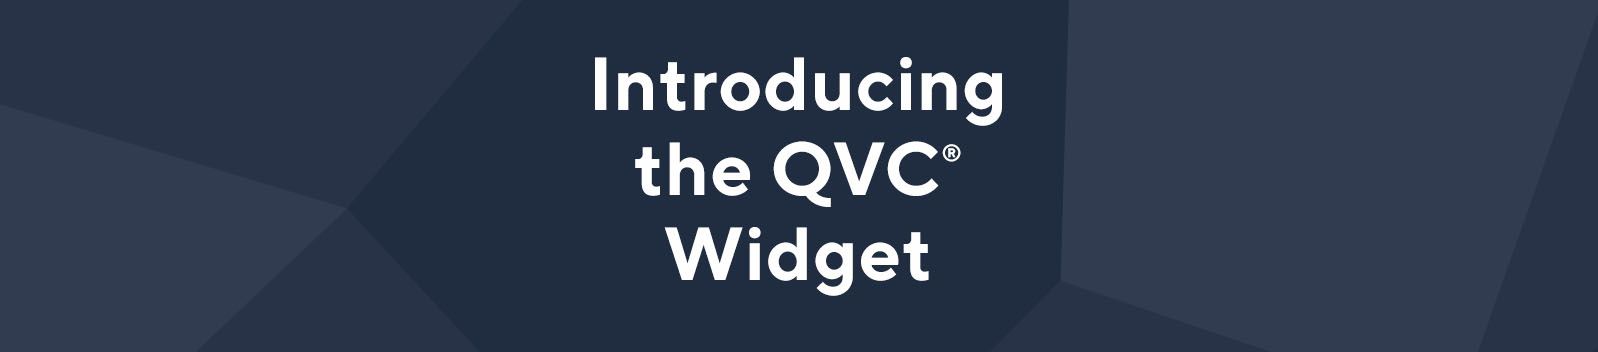 Introducing the QVC® Widget